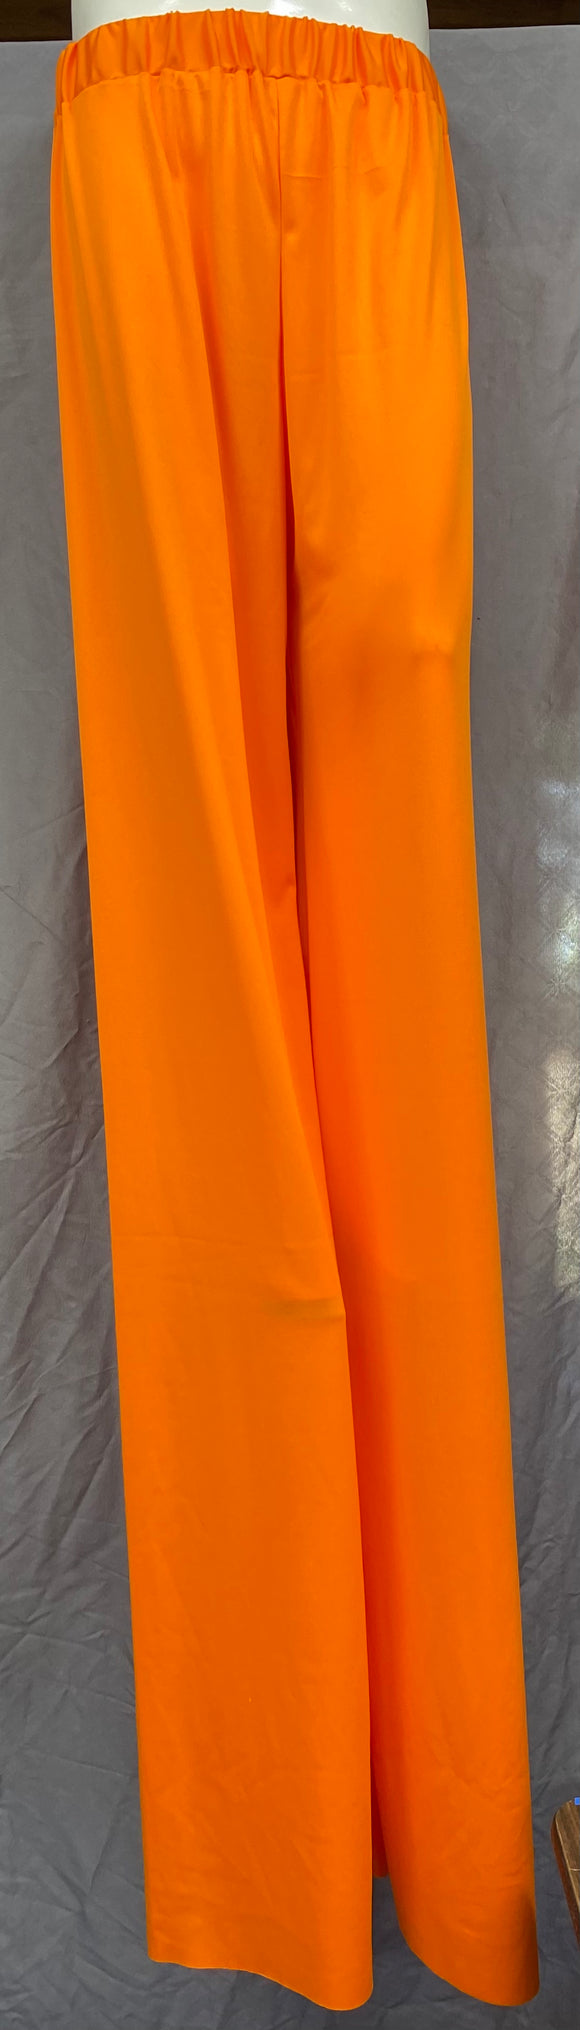 Stilt Pants - Neon Orange Matte 66.5